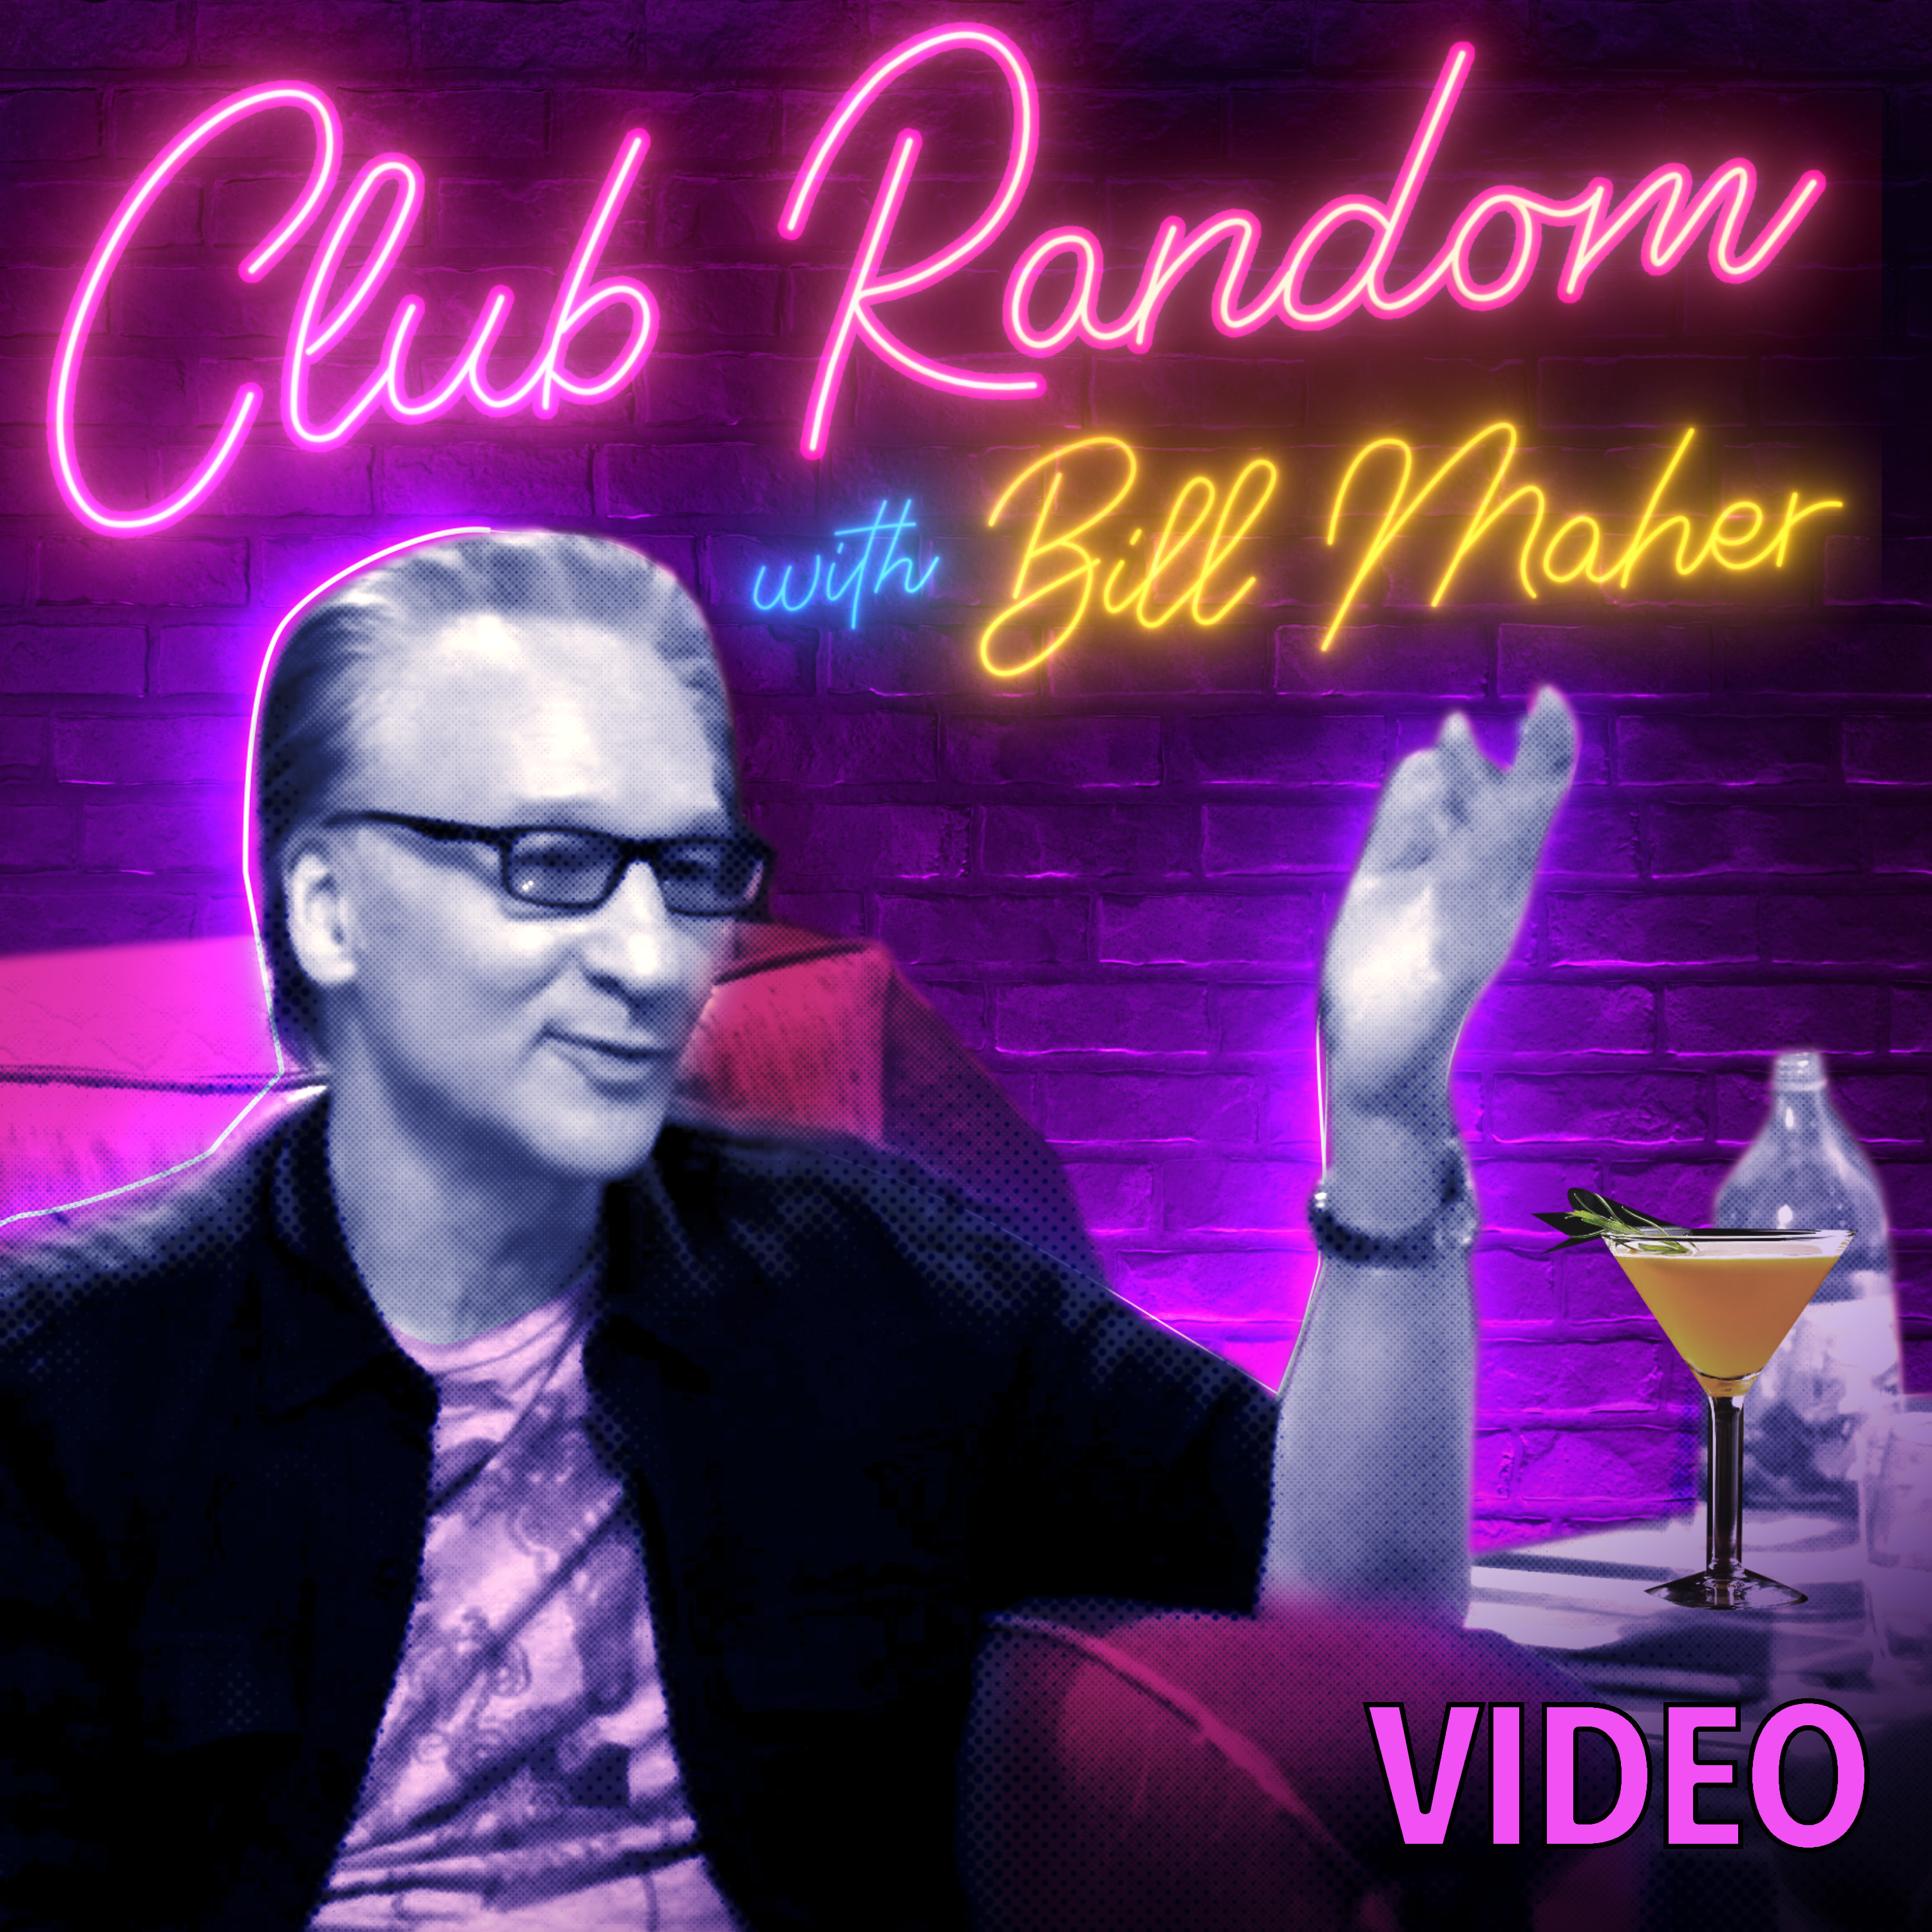 Video: Richard Dreyfuss | Club Random with Bill Maher